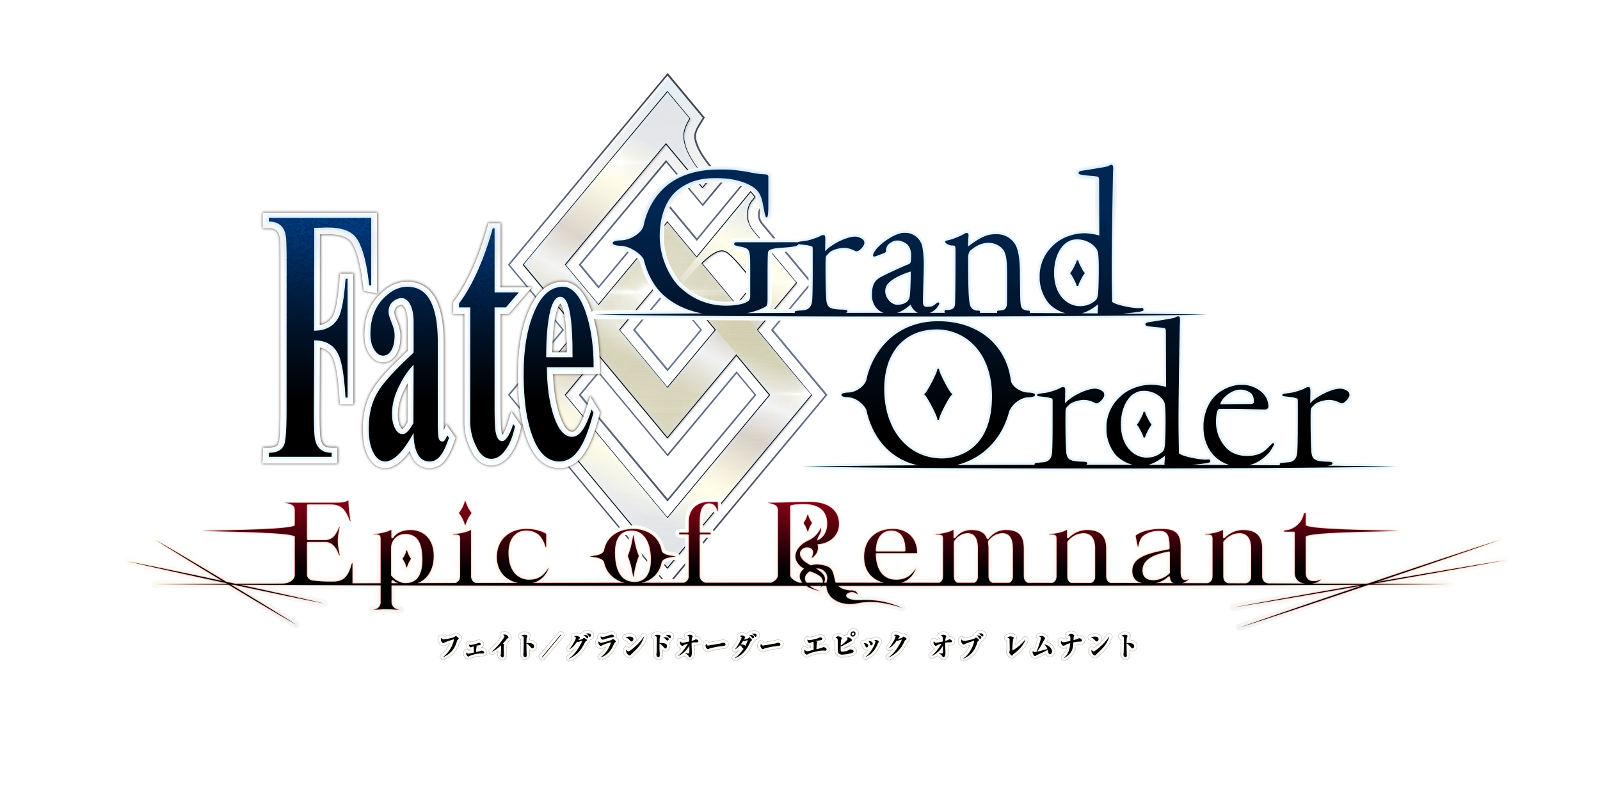 Order of fate. Grand order логотип. Fate Grand order лого. Fate Grand order logo.